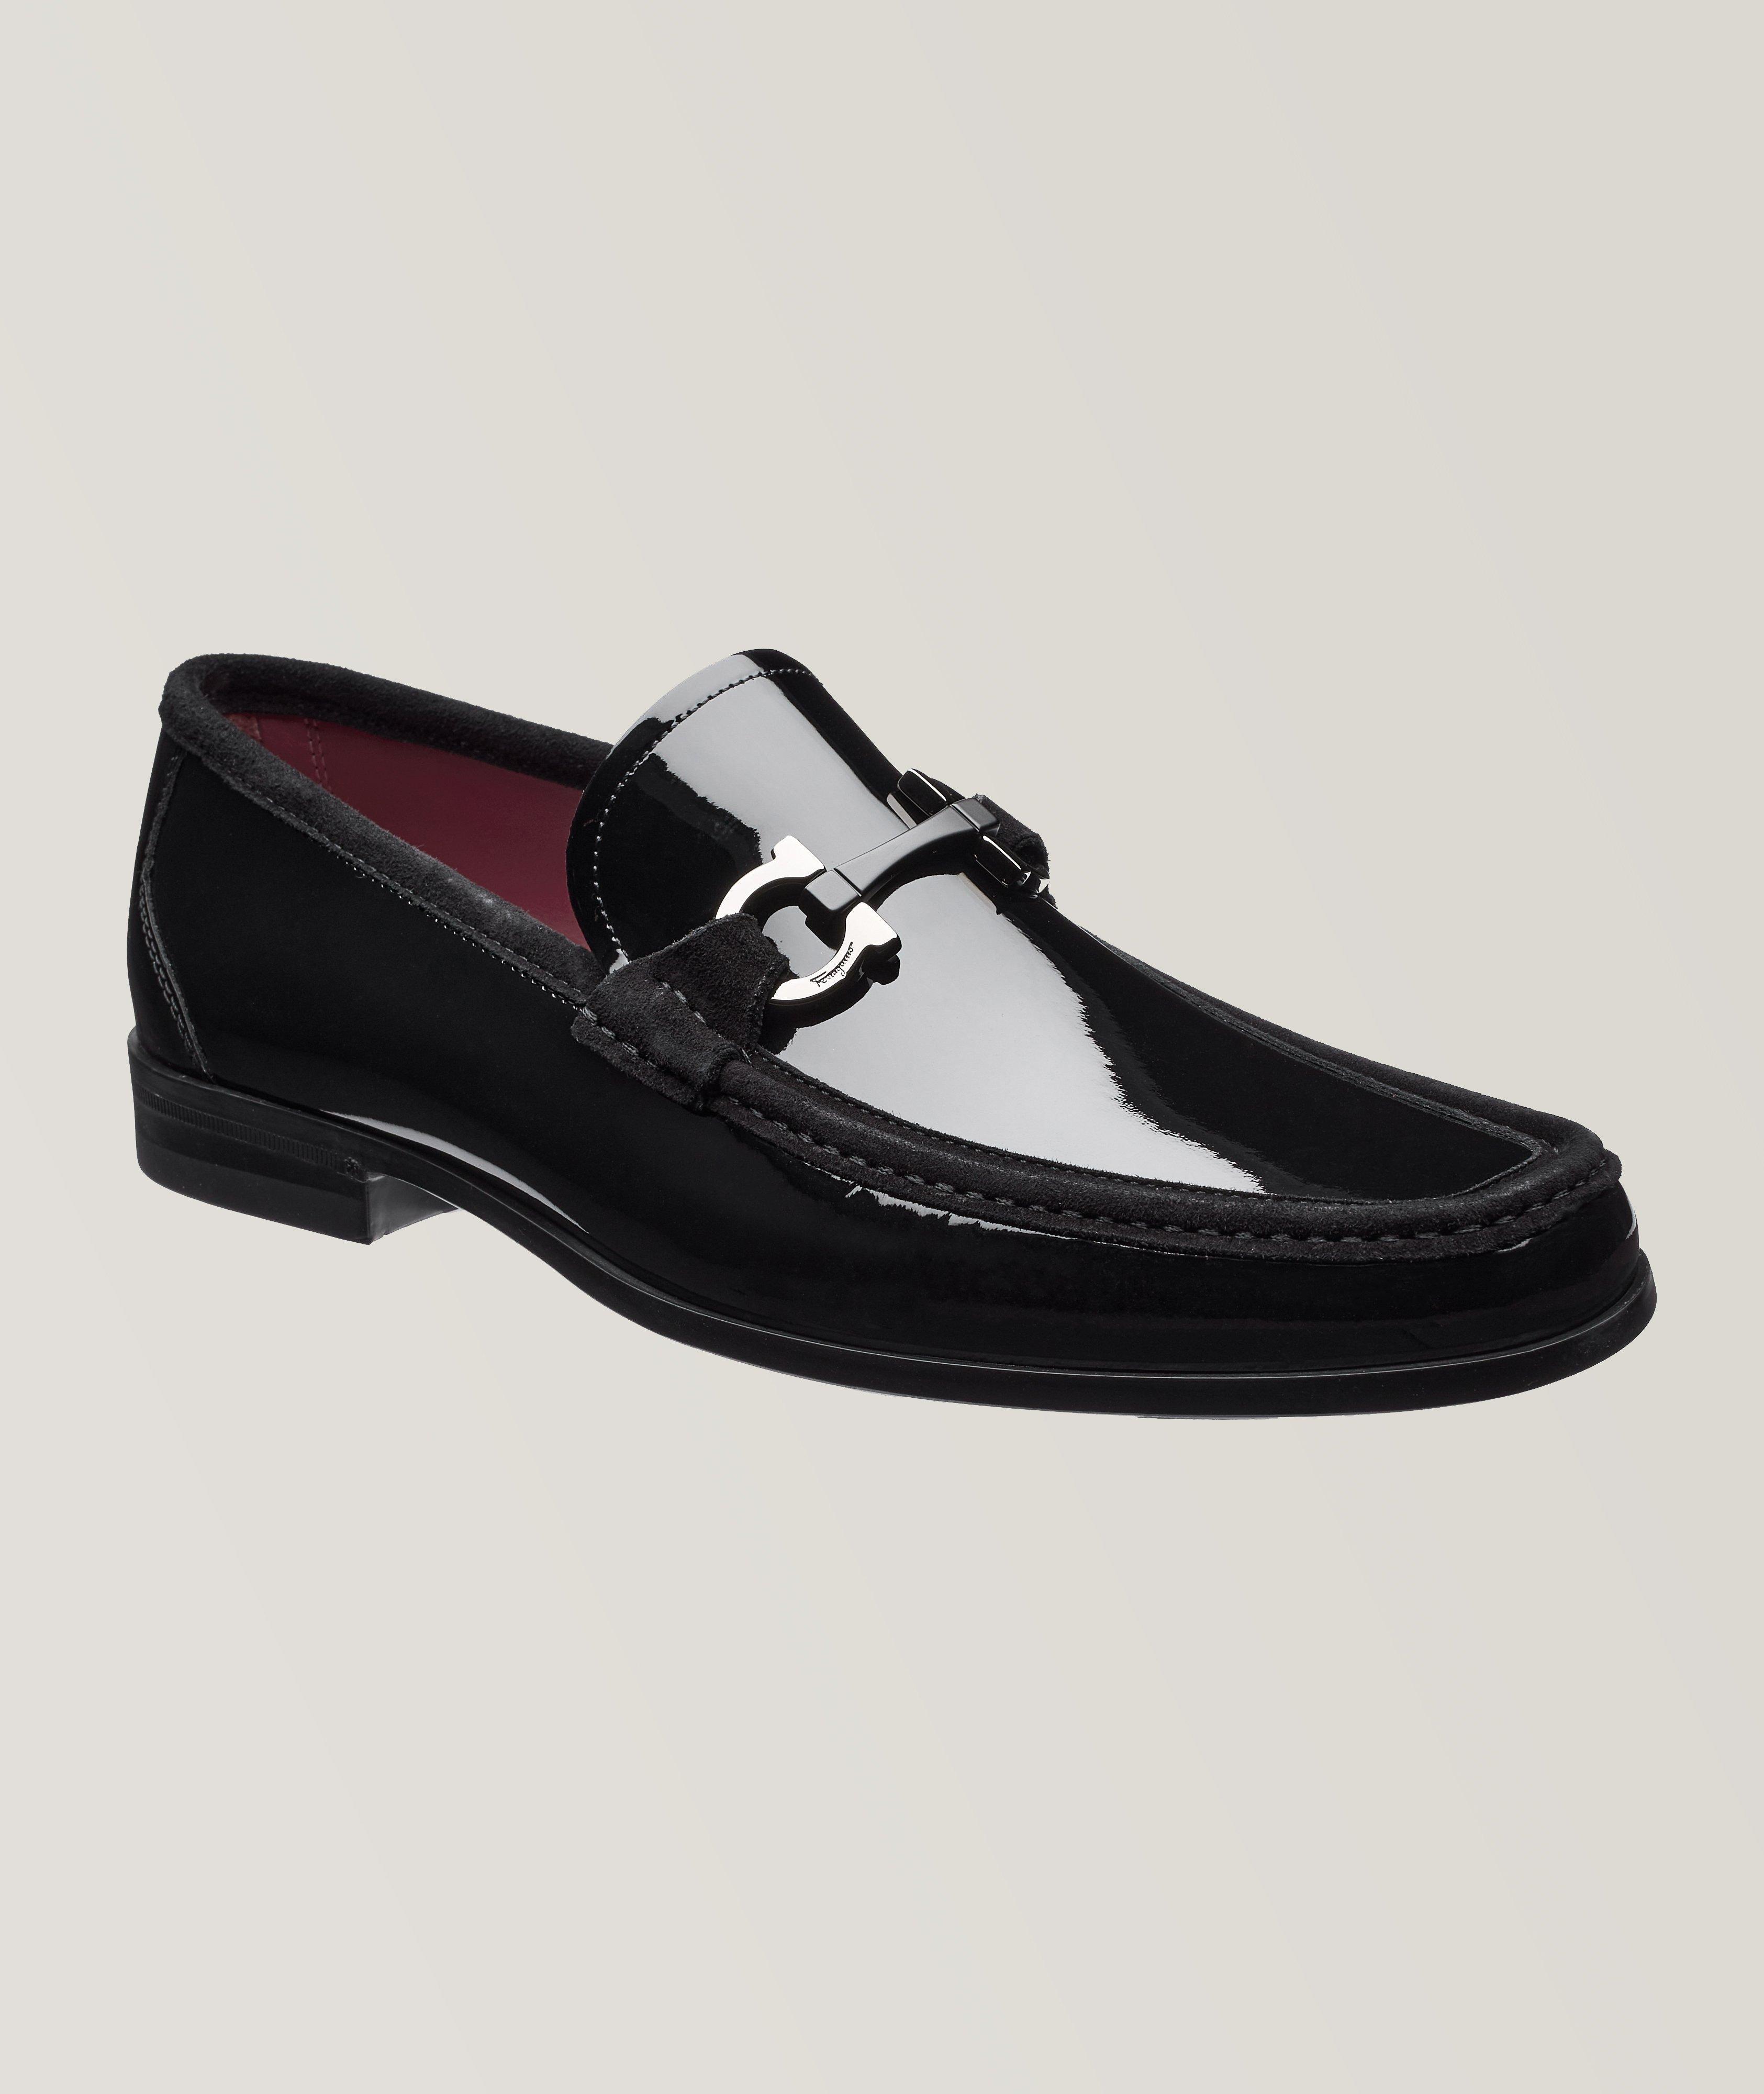 Ferragamo Gancini Patent Leather Loafers, Dress Shoes